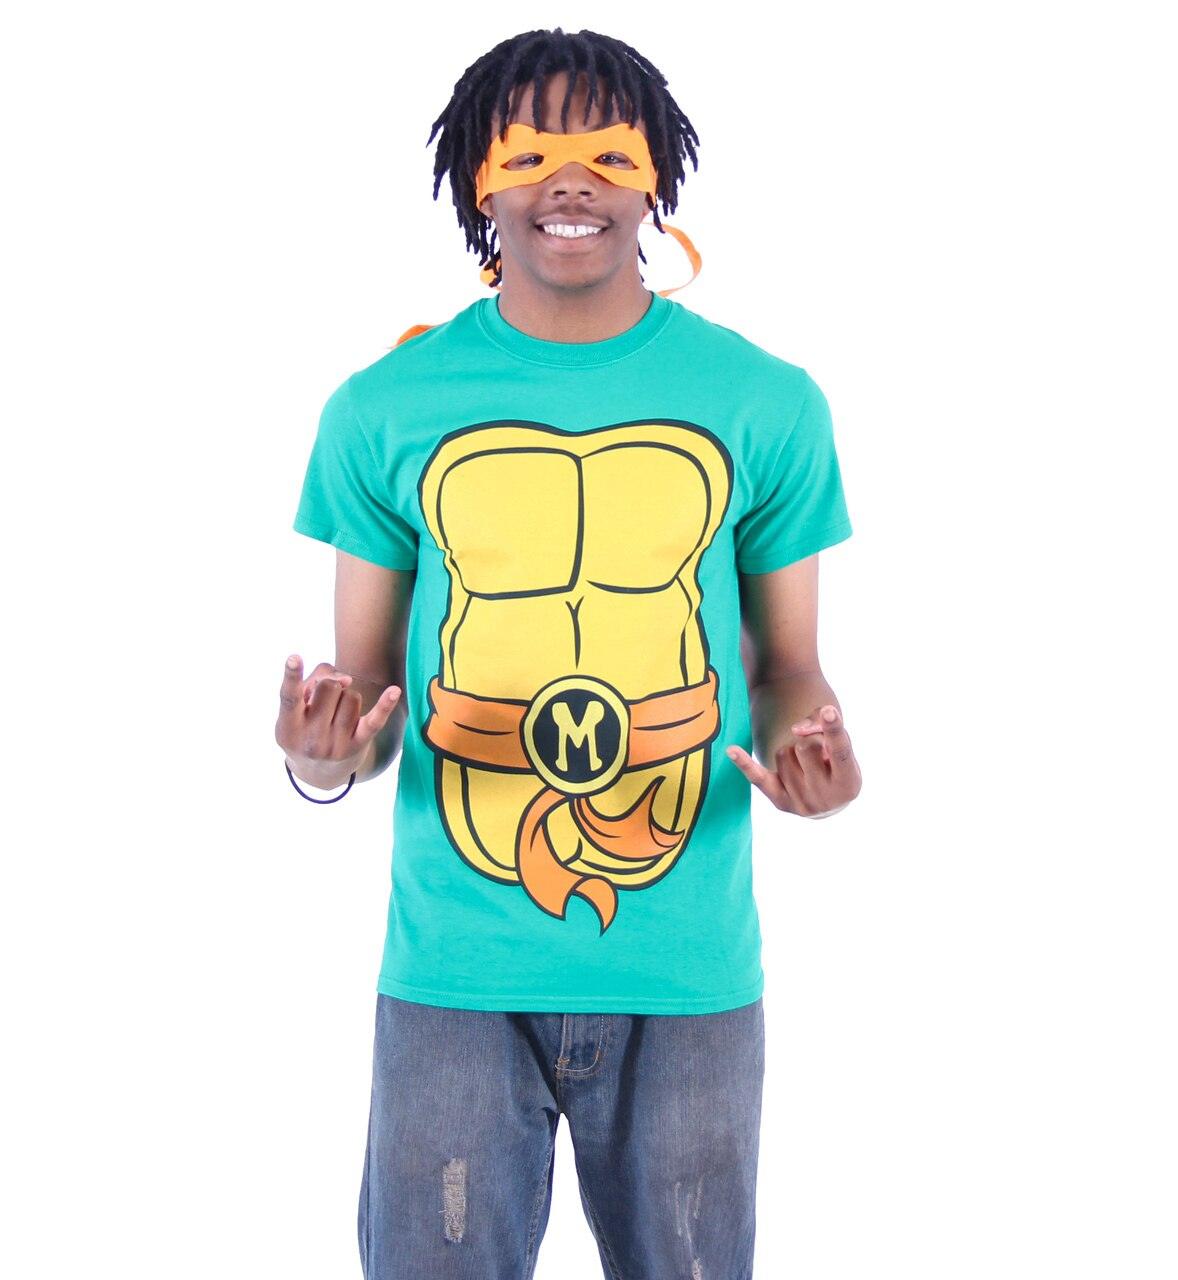 Great, Ninja Turtle Costume, Ninja Turtle Outfit, Ninja Turtle Cosplay, TMNT  Look, TMNT Style, Ninja Turtle Clothing, for Kids, Halloween 